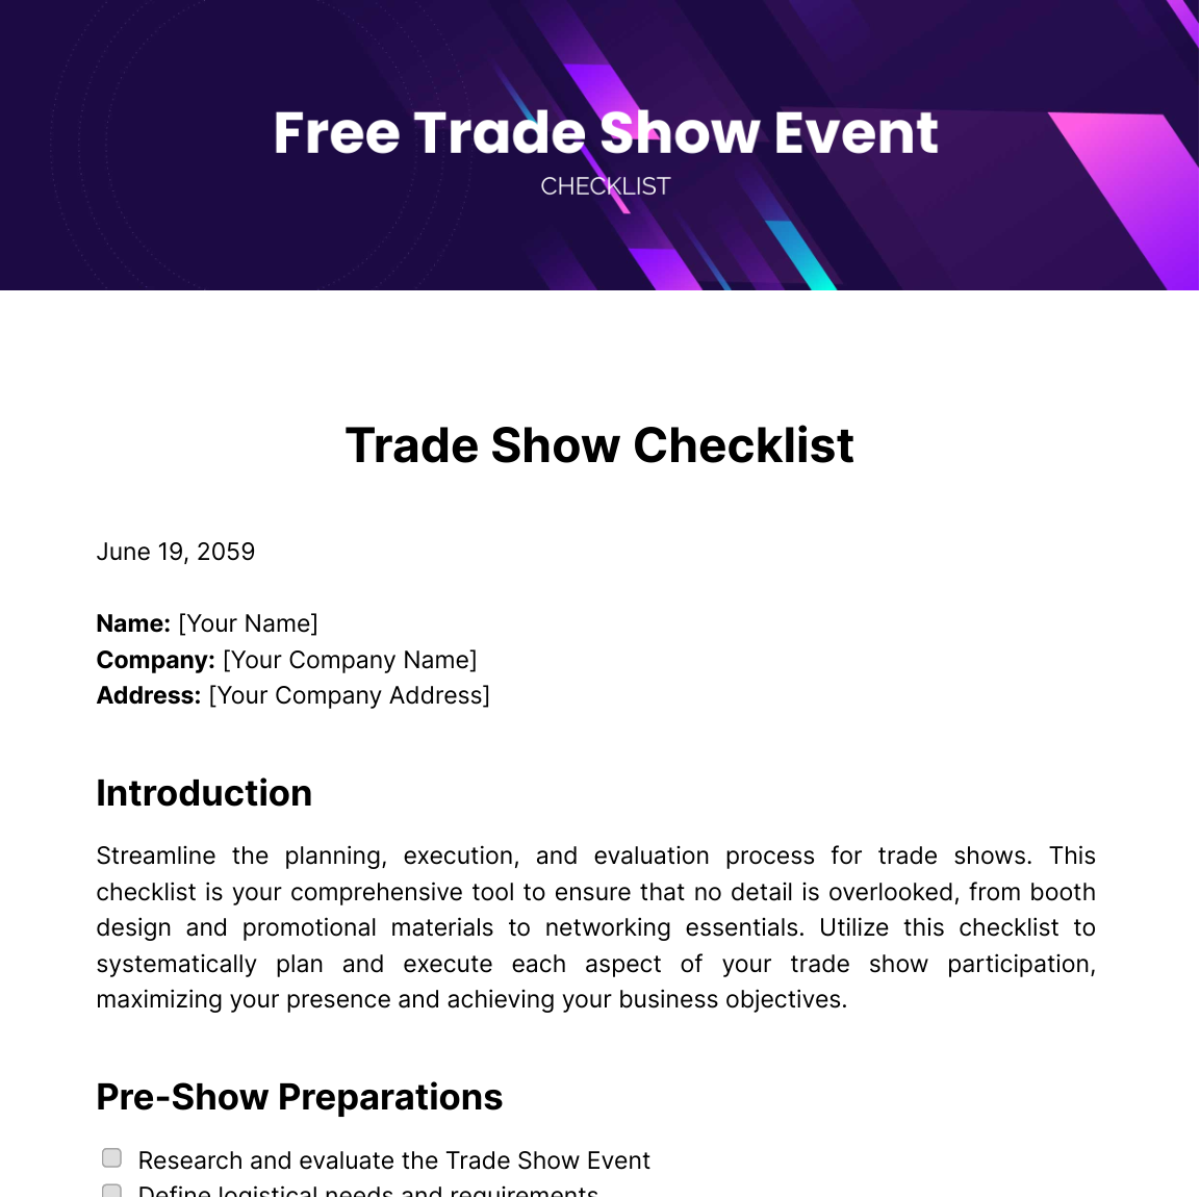 Free Trade Show Event Checklist Template